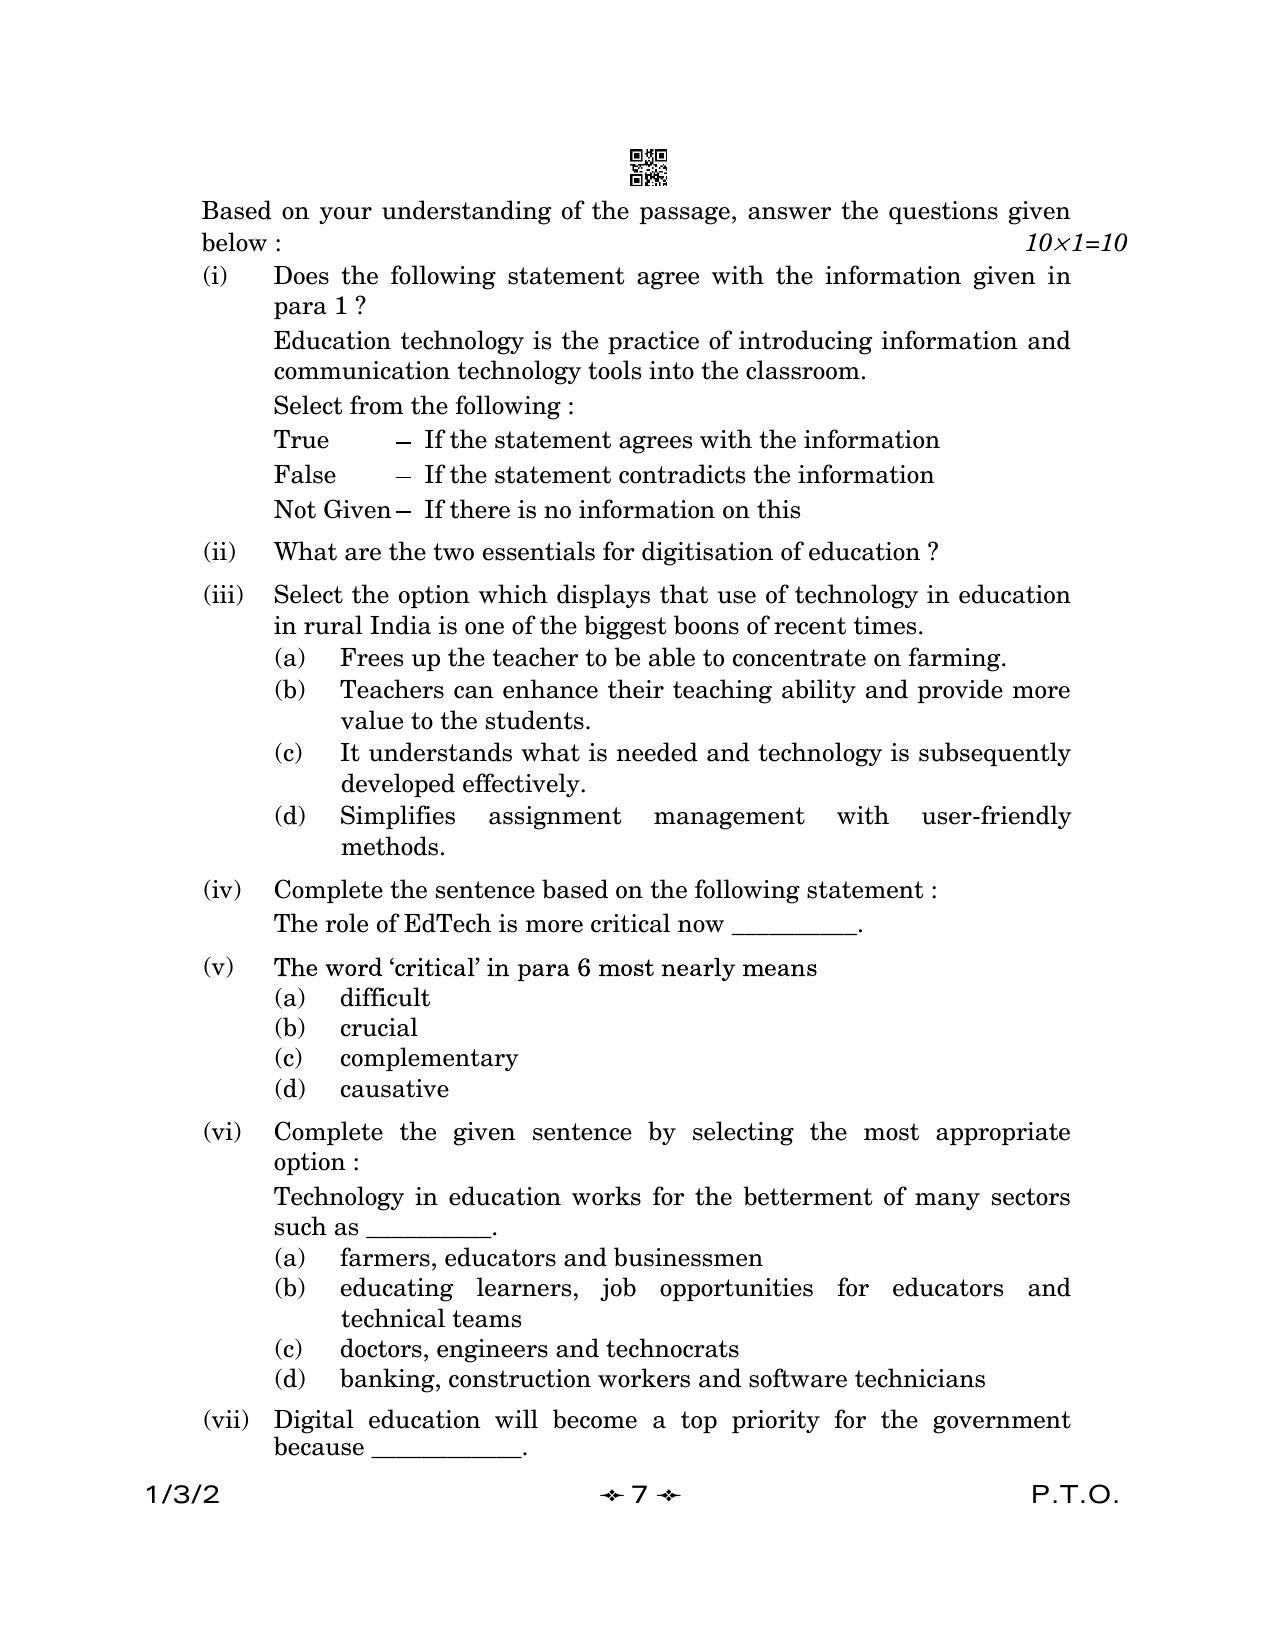 CBSE Class 12 1-3-2 English Core 2023 Question Paper - Page 7